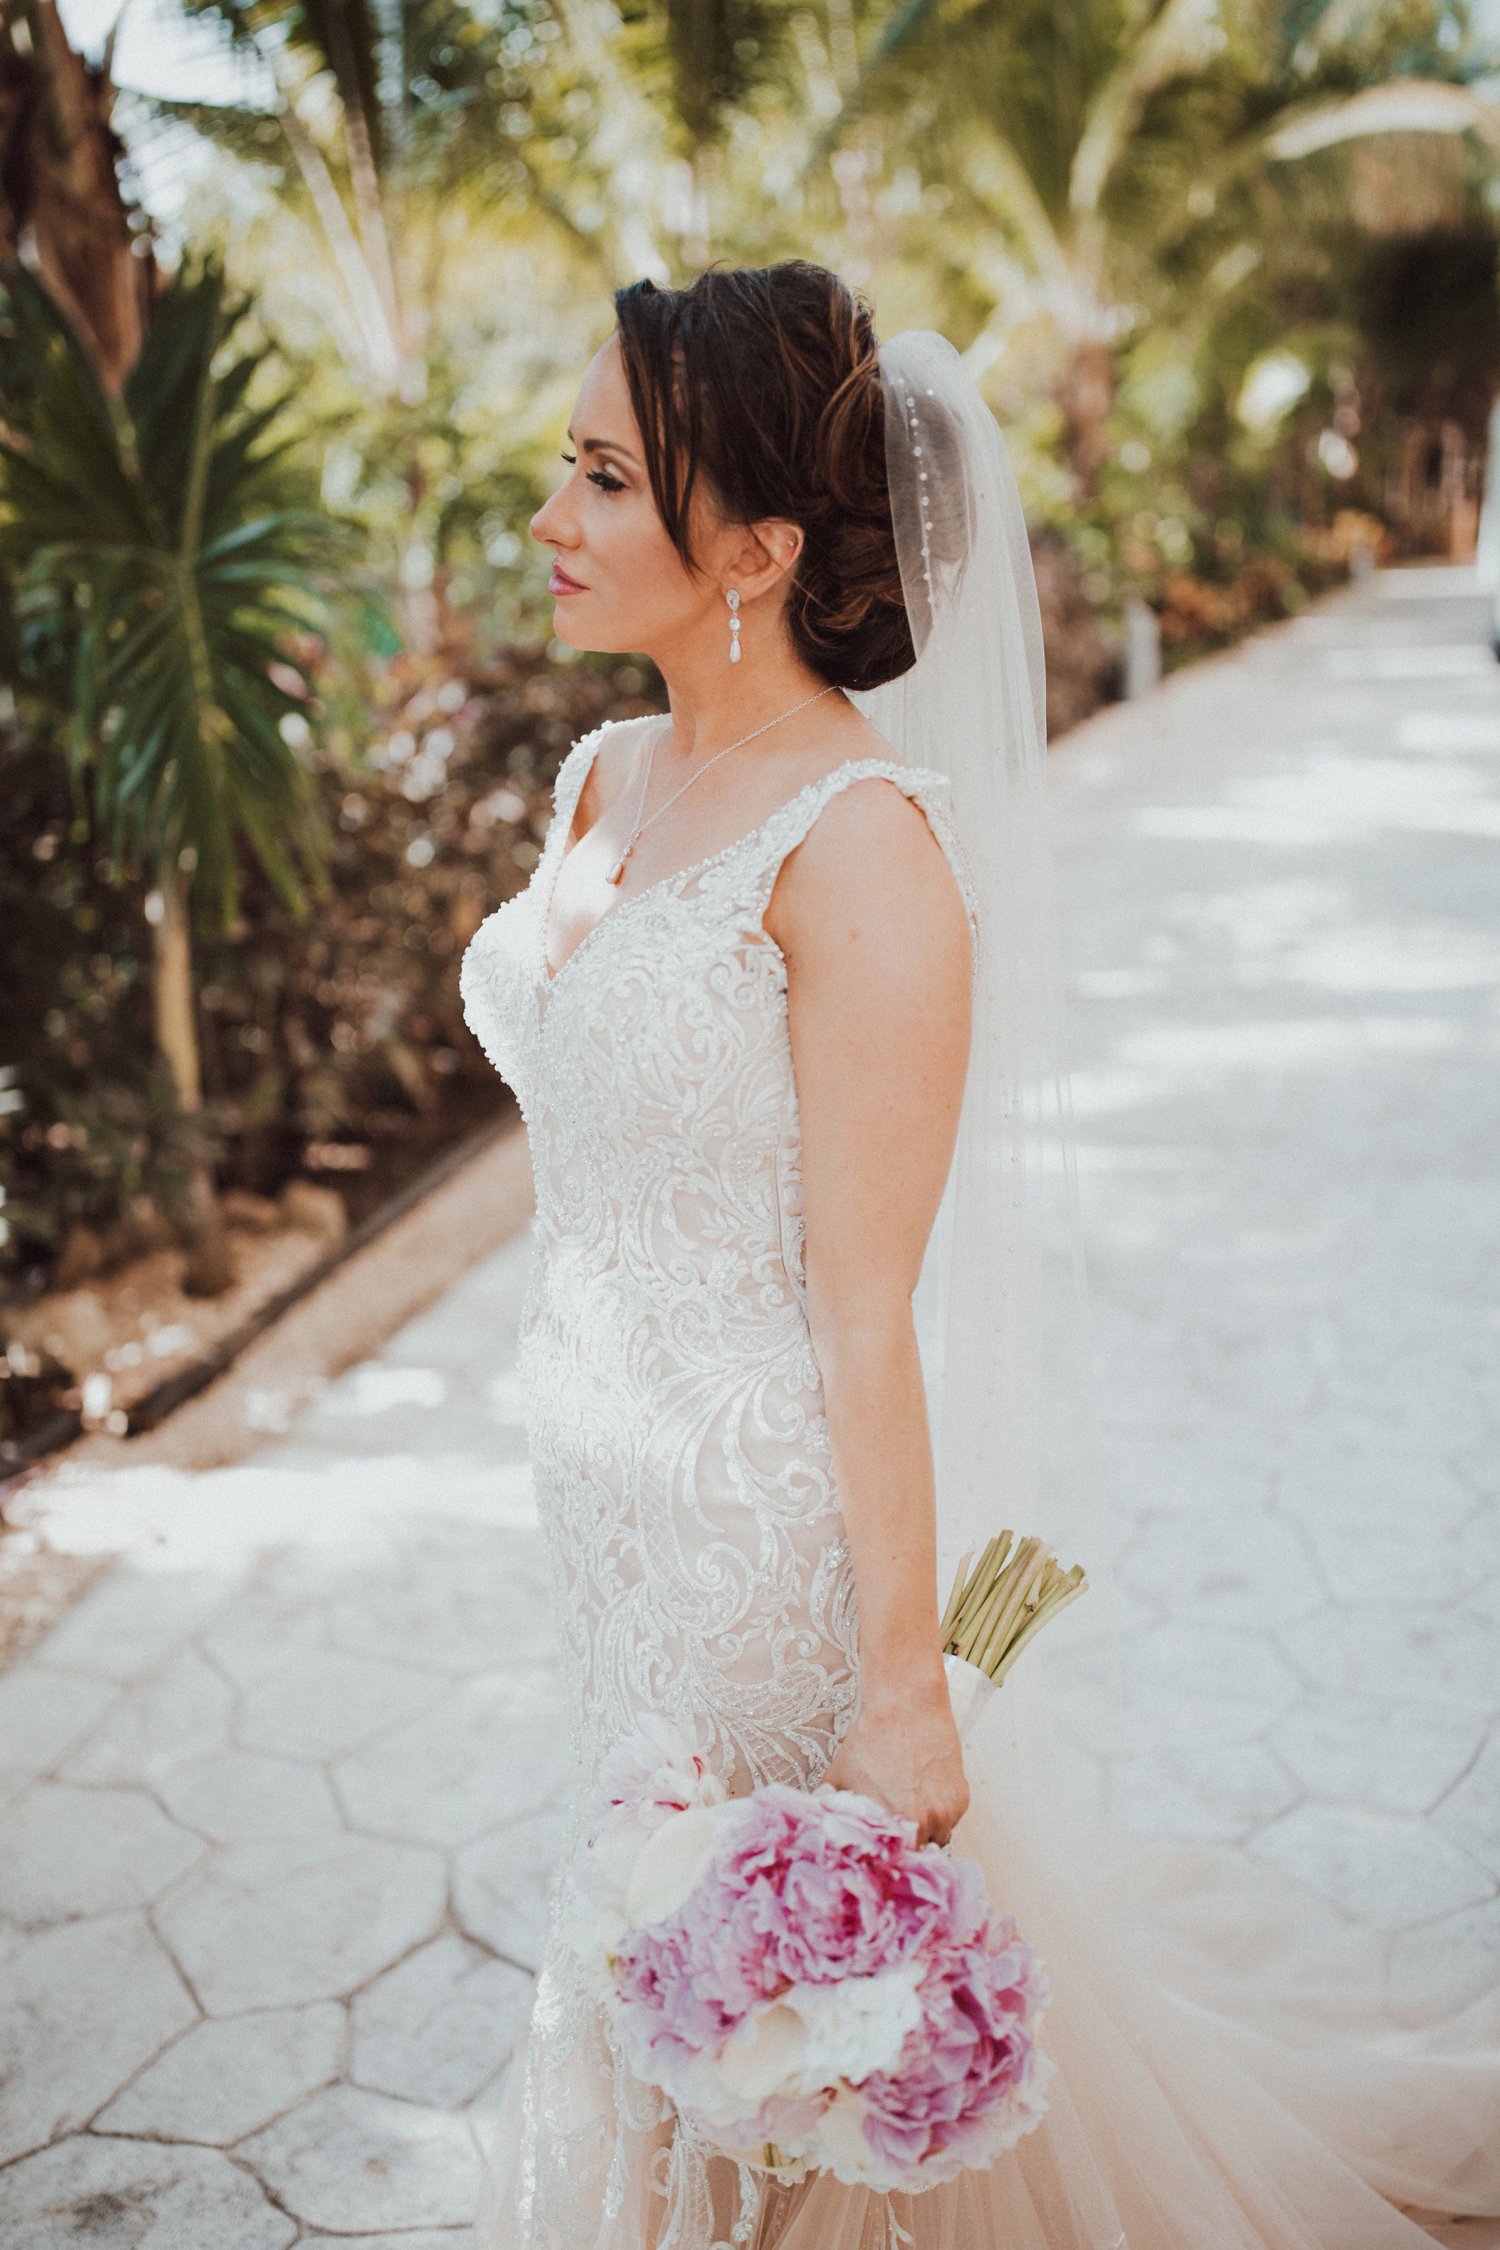  images by feliciathephotographer.com | destination wedding photographer | el dorado riviera maya | glamorous | beachside | resort | bride | beaded dress | pearl edged veil | pink and white bouquet | tropical | candid | allure | 